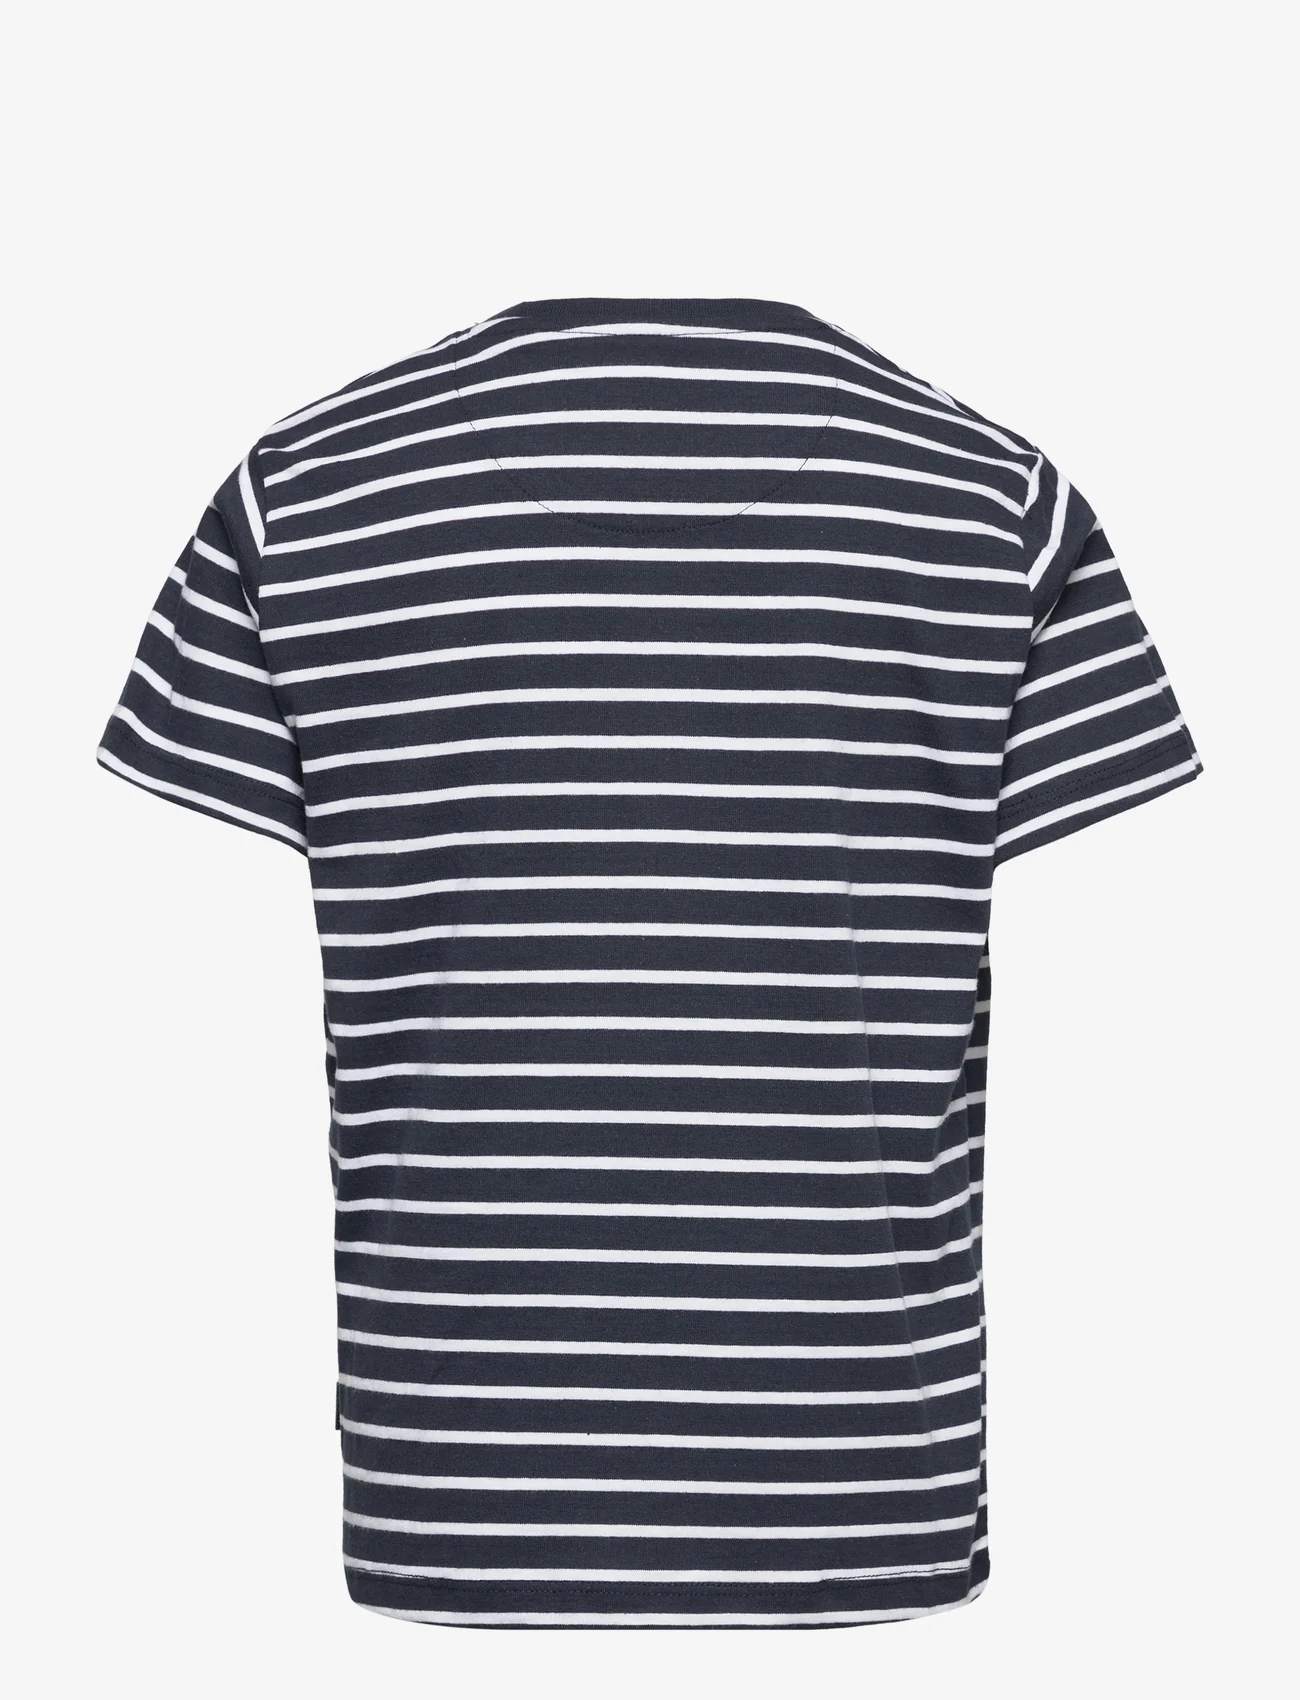 Kronstadt - Timmi Kids Organic/Recycled striped t-shirt - kurzärmelige - navy / white - 1